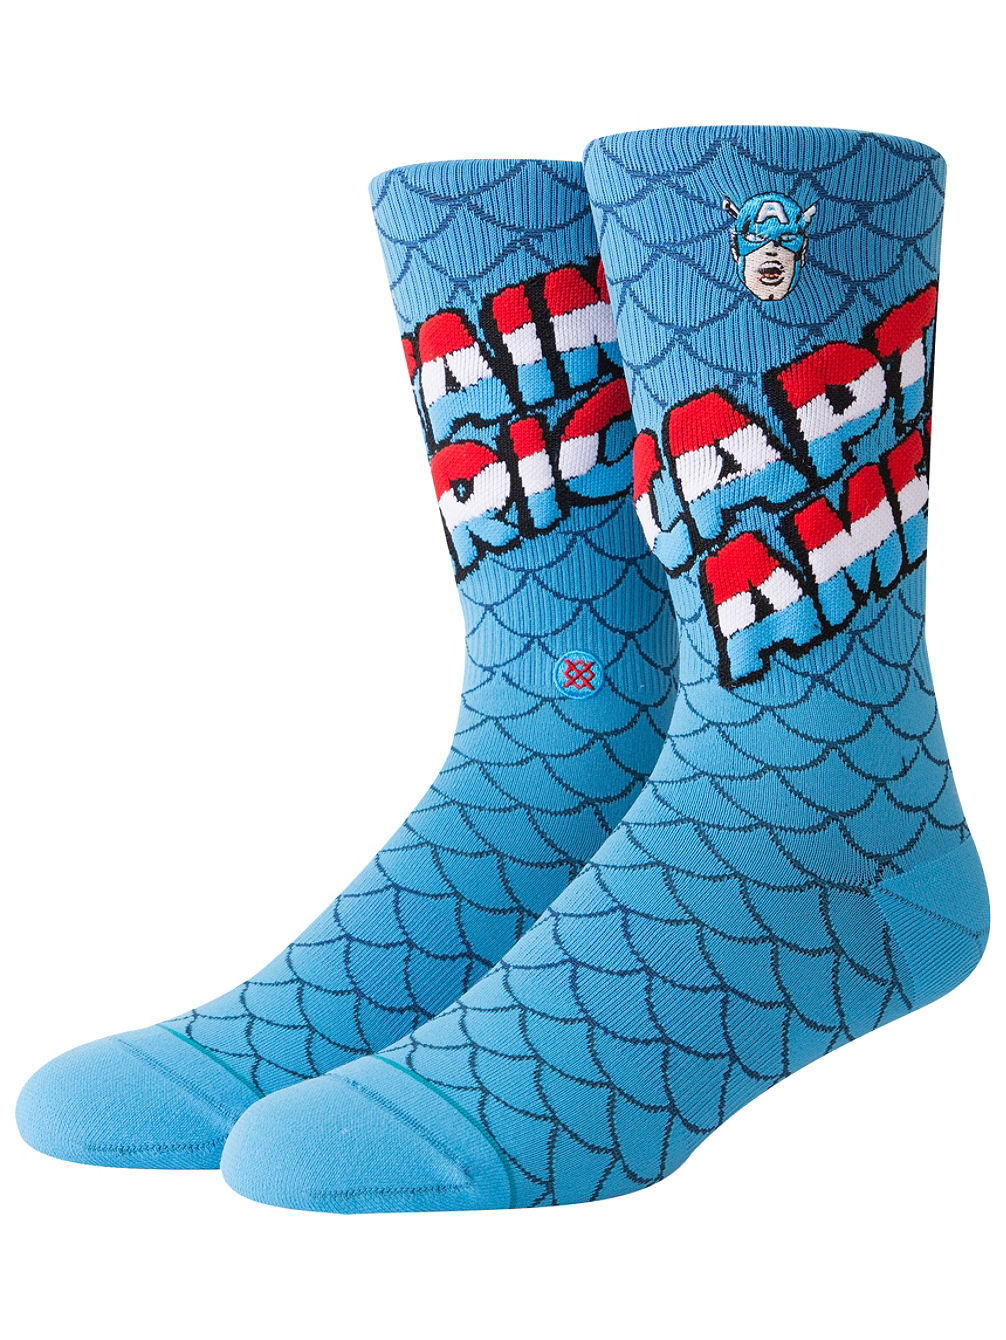 X Marvel Captain America Socks